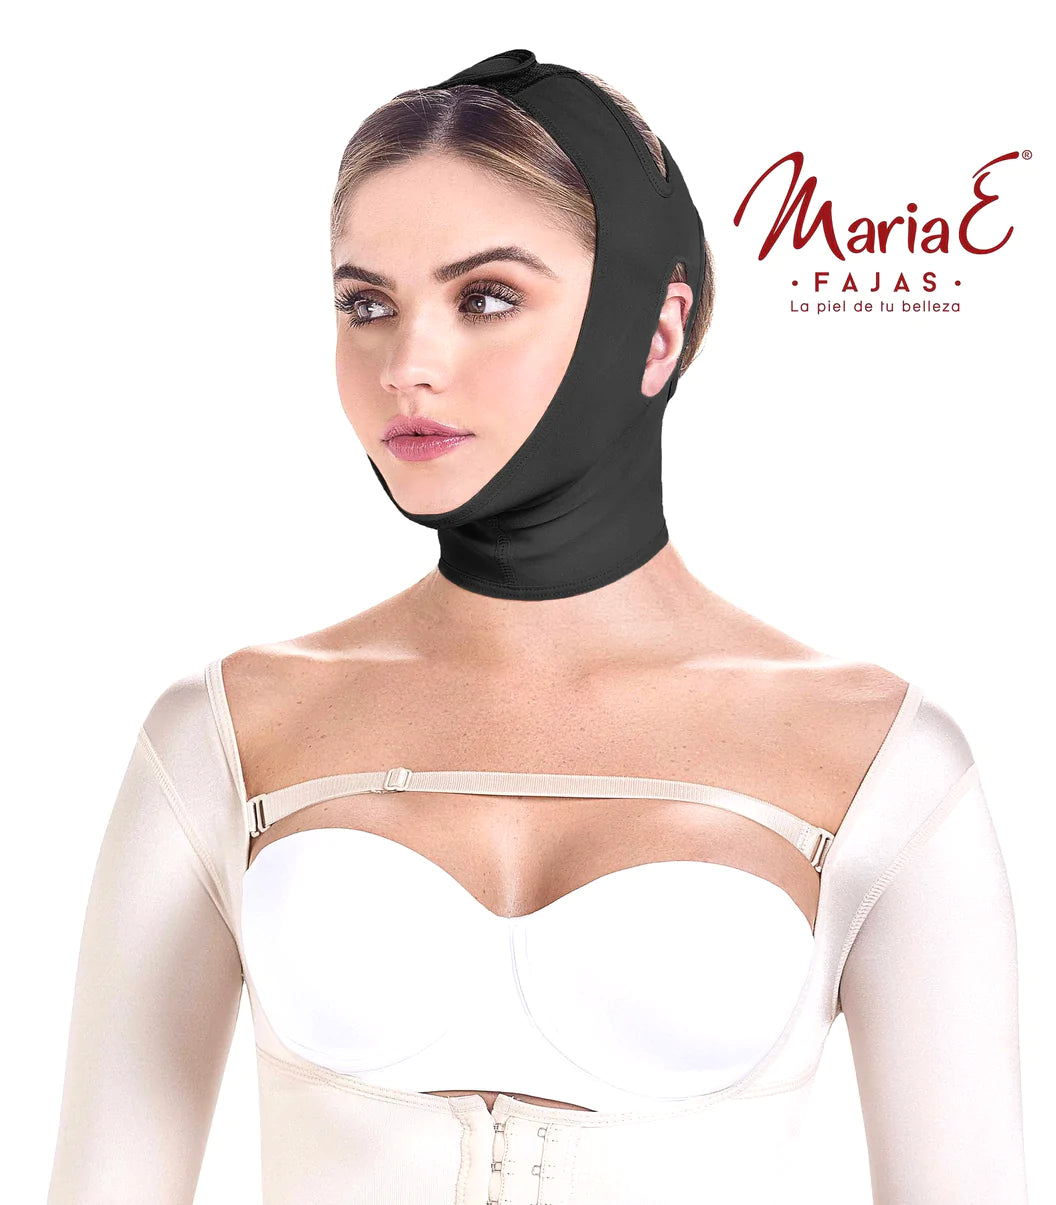 MariaE Fajas REF: 9010 Compression Chin Strap for Women / Mentonera / Powernet